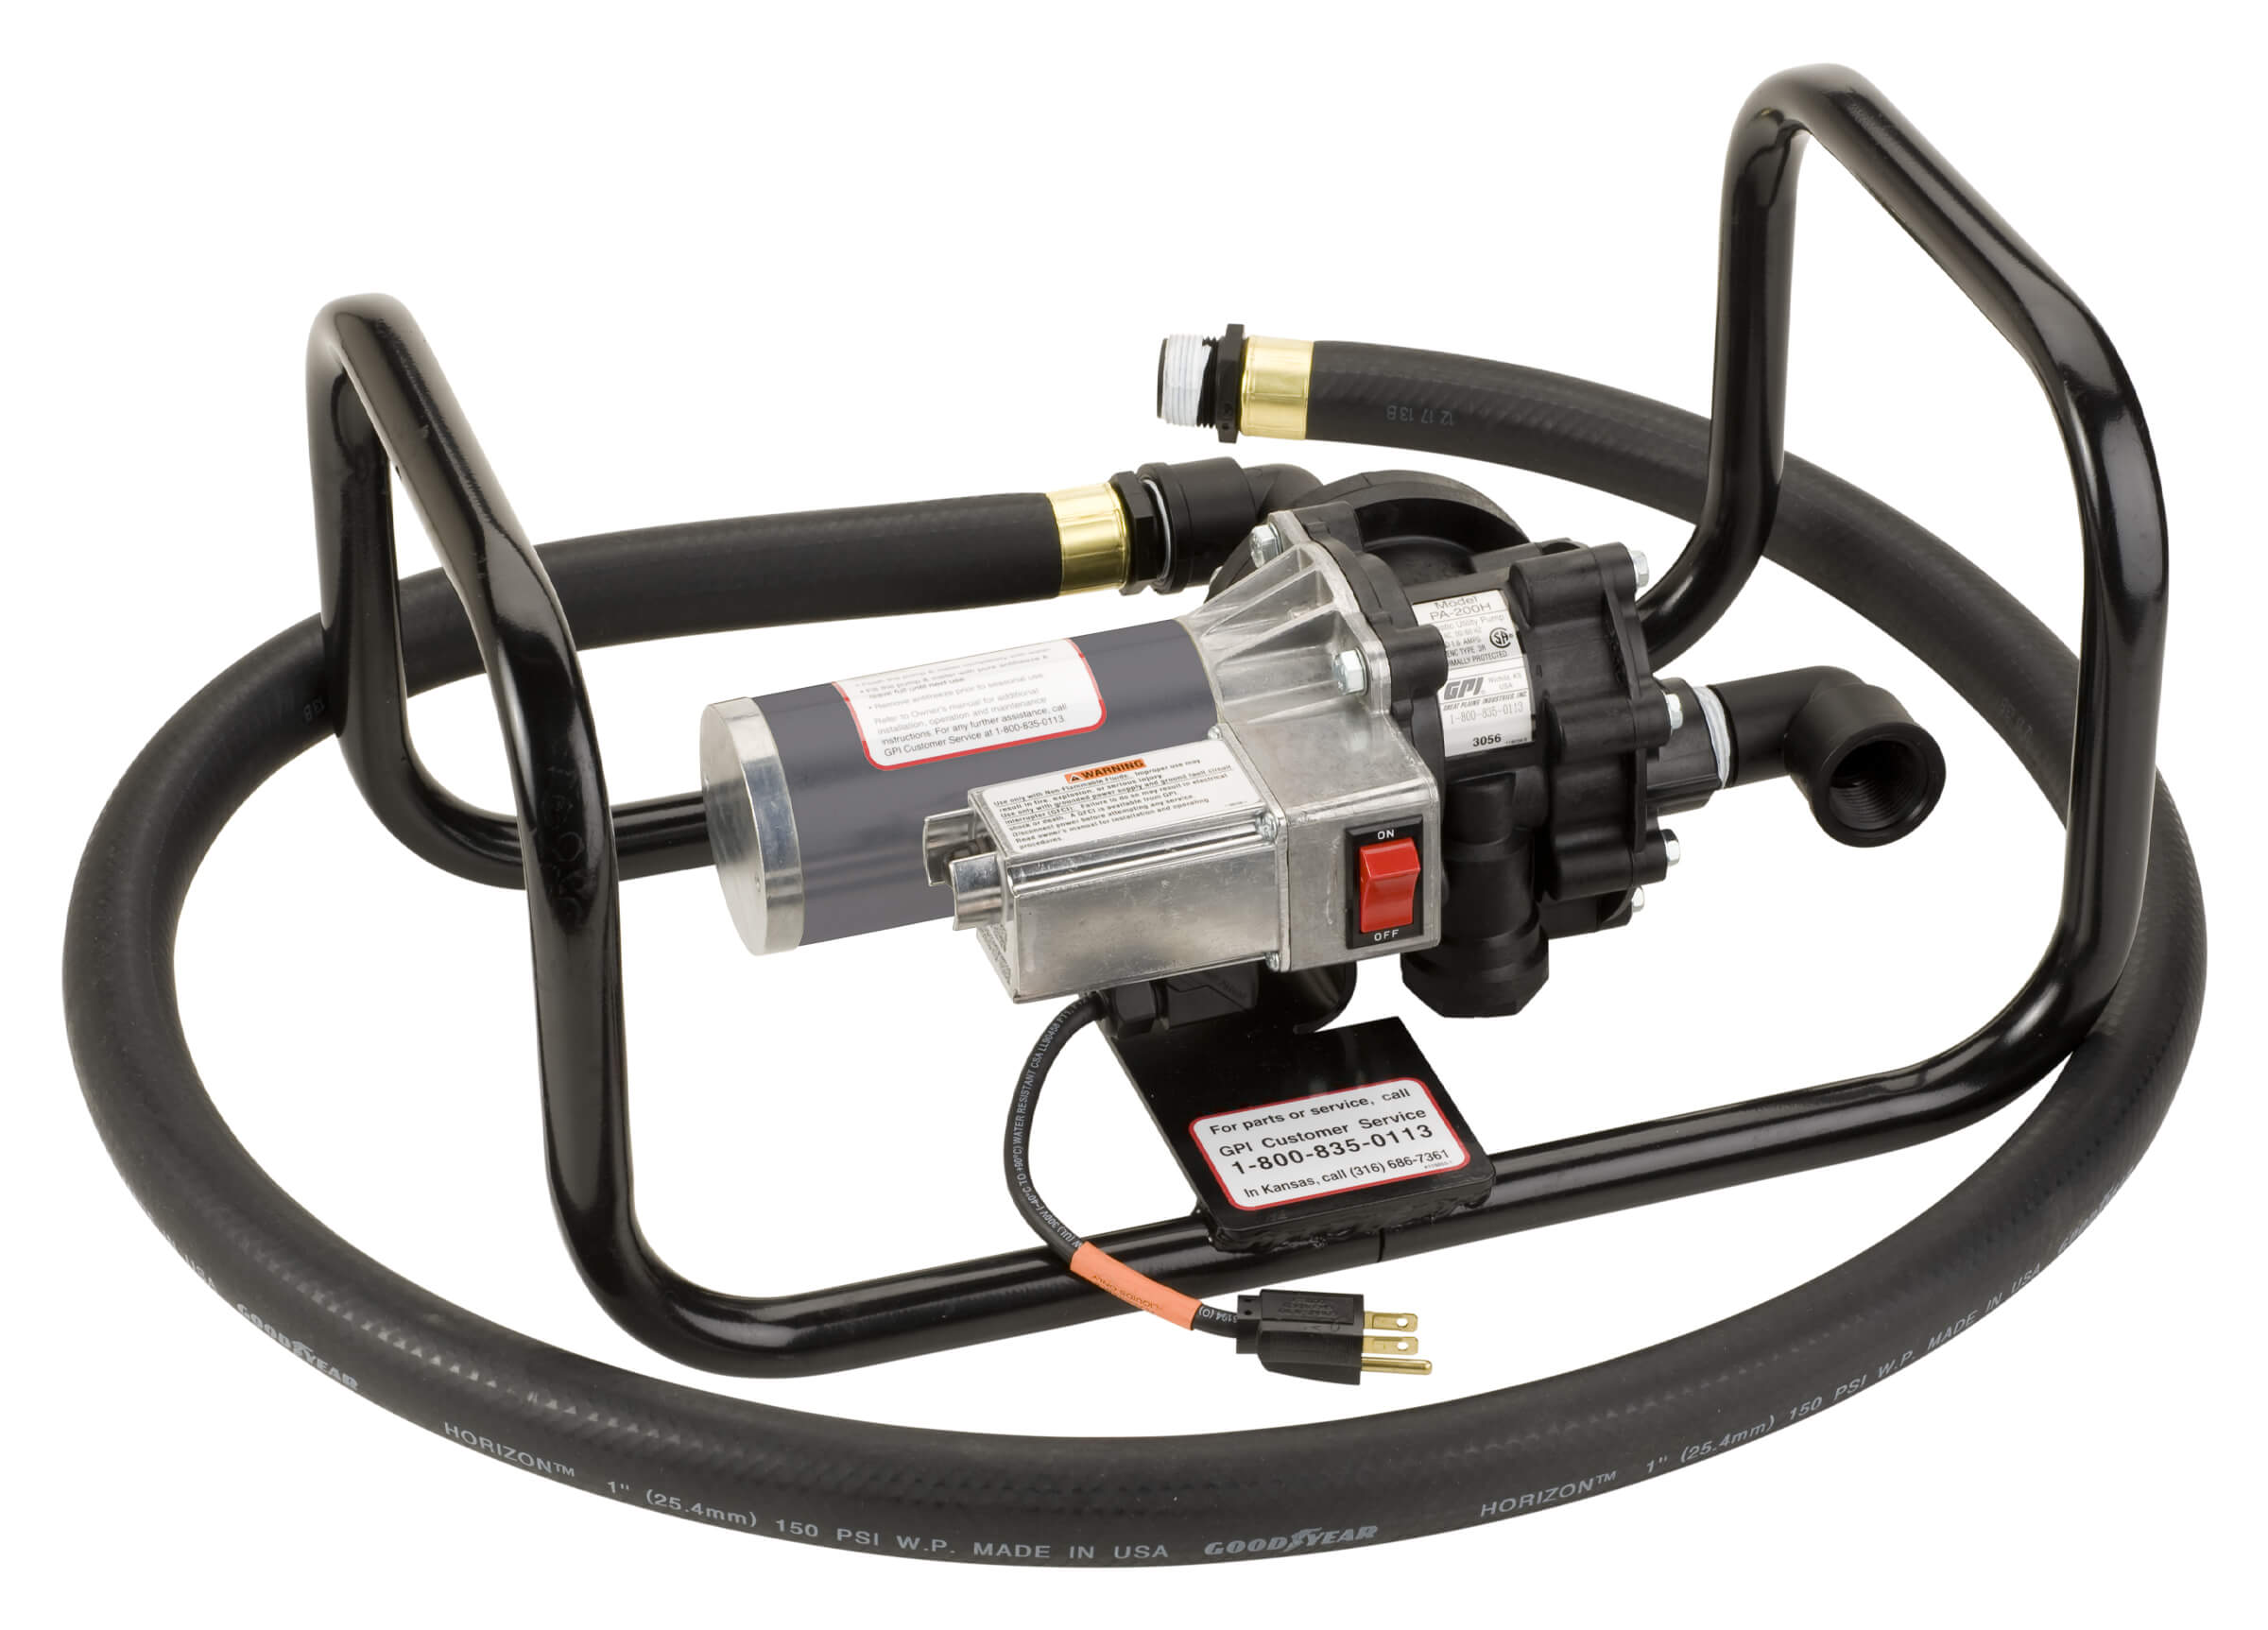 SIP 230v Diesel Transfer Pump with Fuel Meter - SIP Industrial Products  Official Website